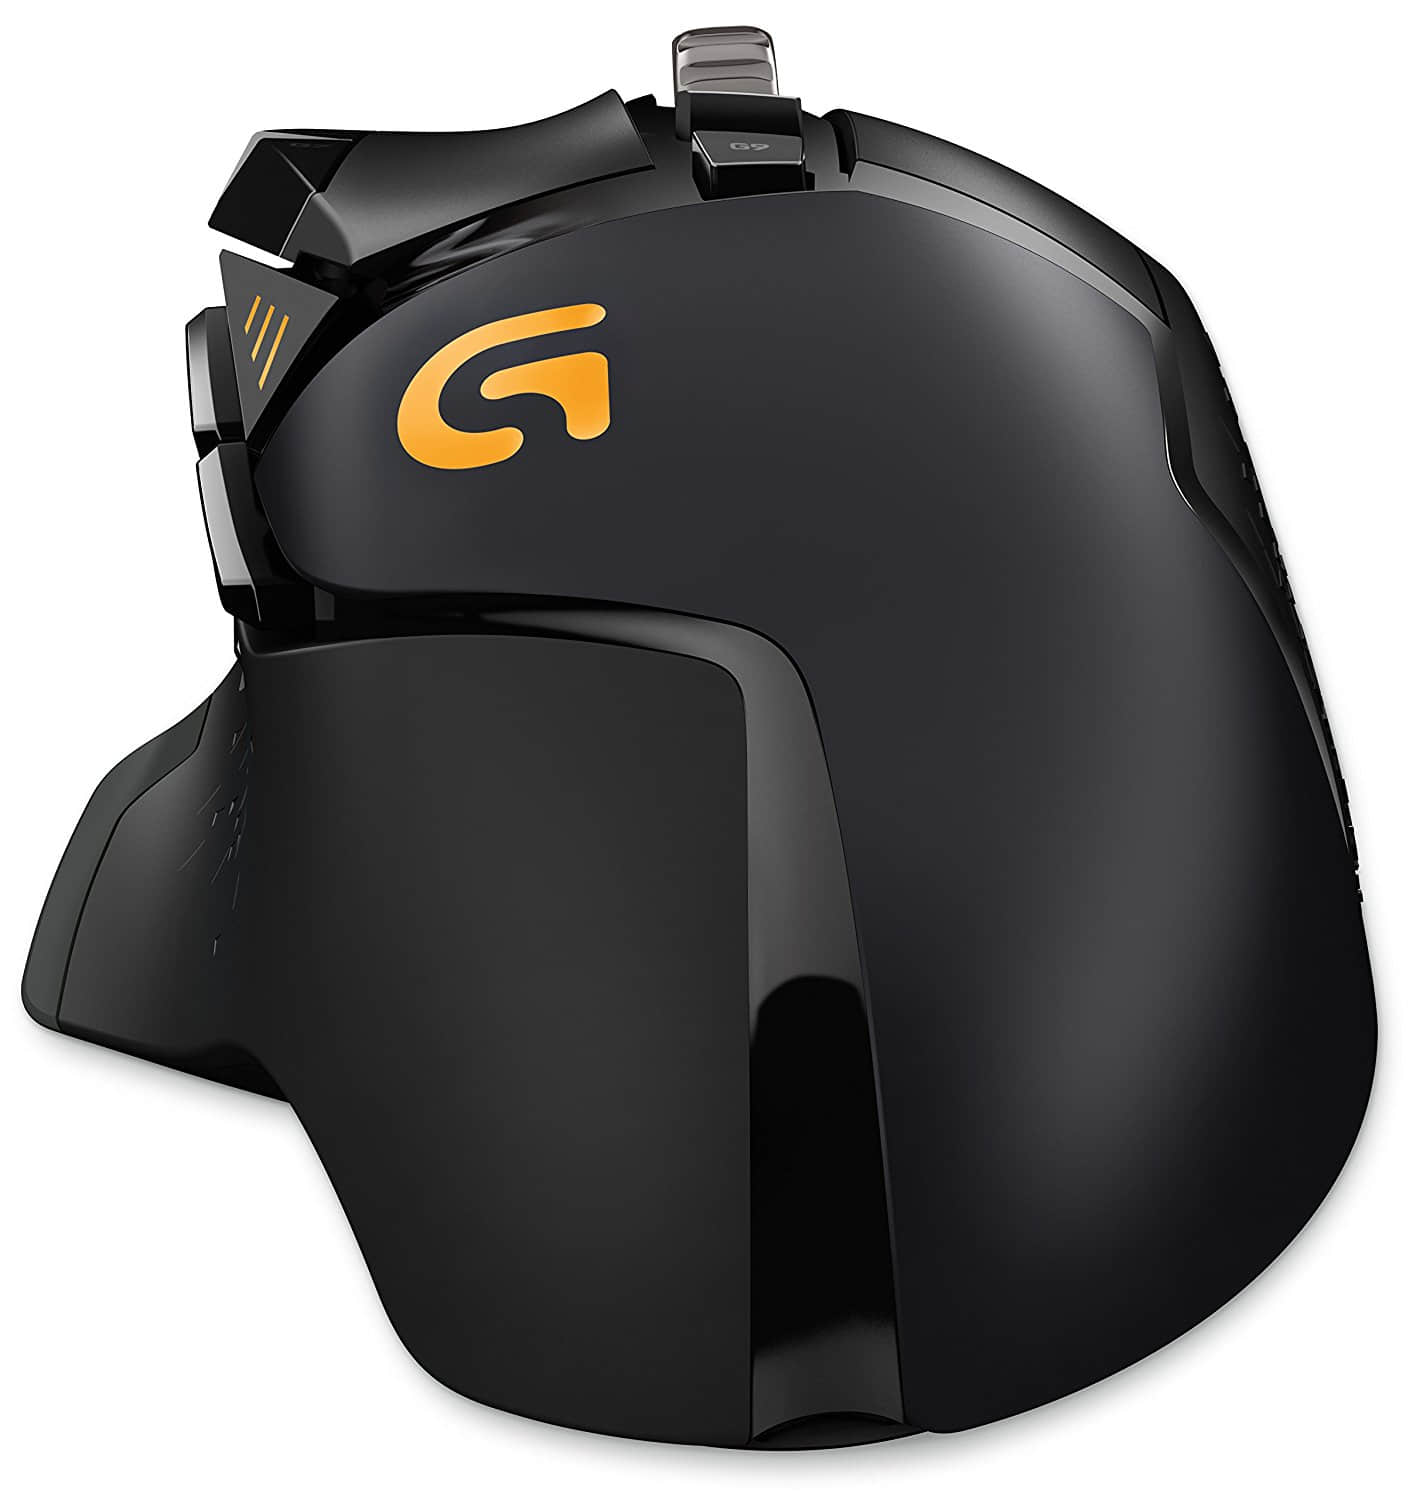 Logitech G502 Gaming Mouse Proteus Spectrum RGB Tunable